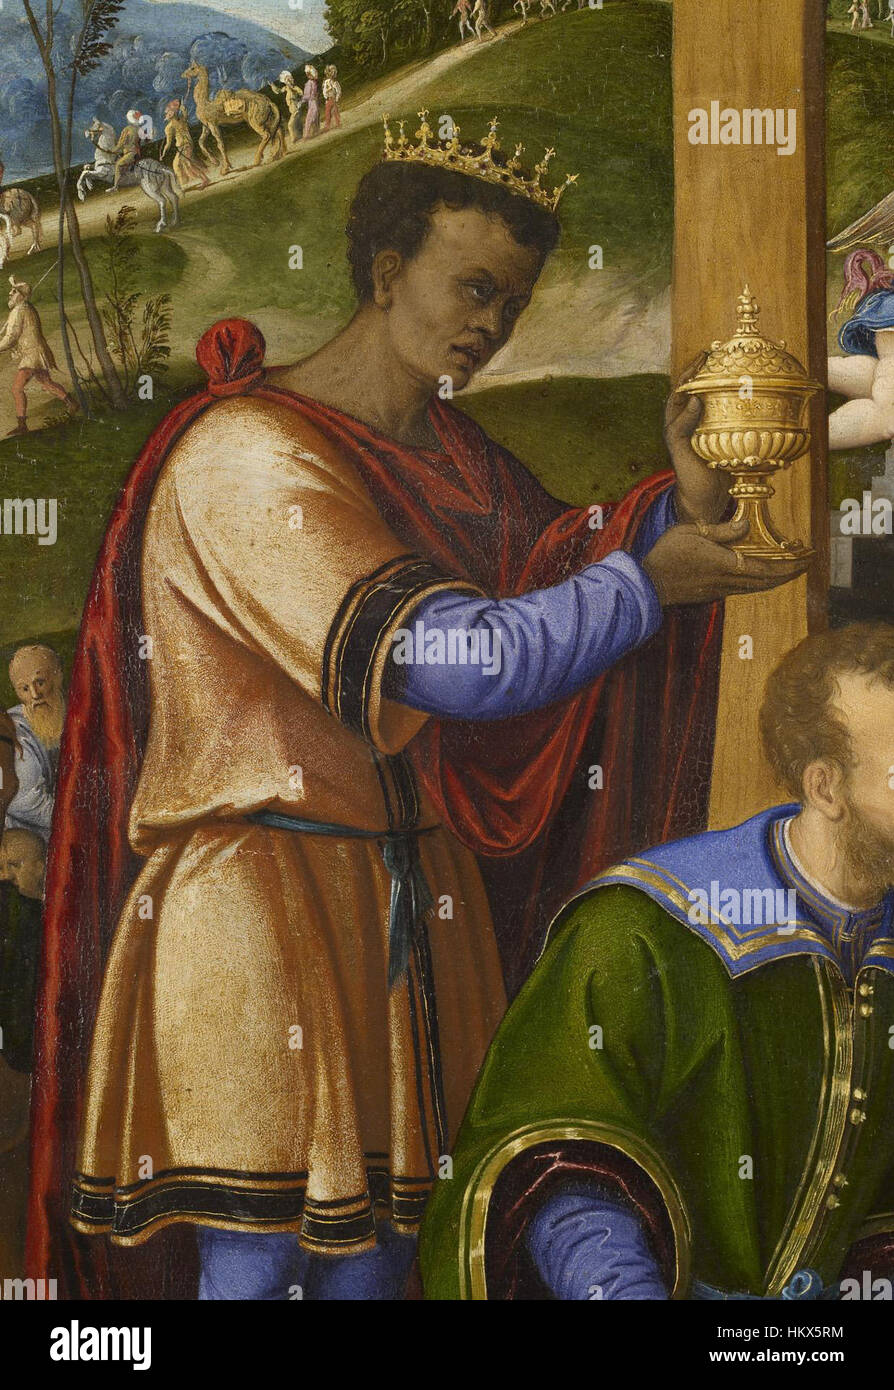 Girolamo da Santacroce - die Anbetung der Heiligen drei Könige - Walters 37261 - Detail A Stockfoto